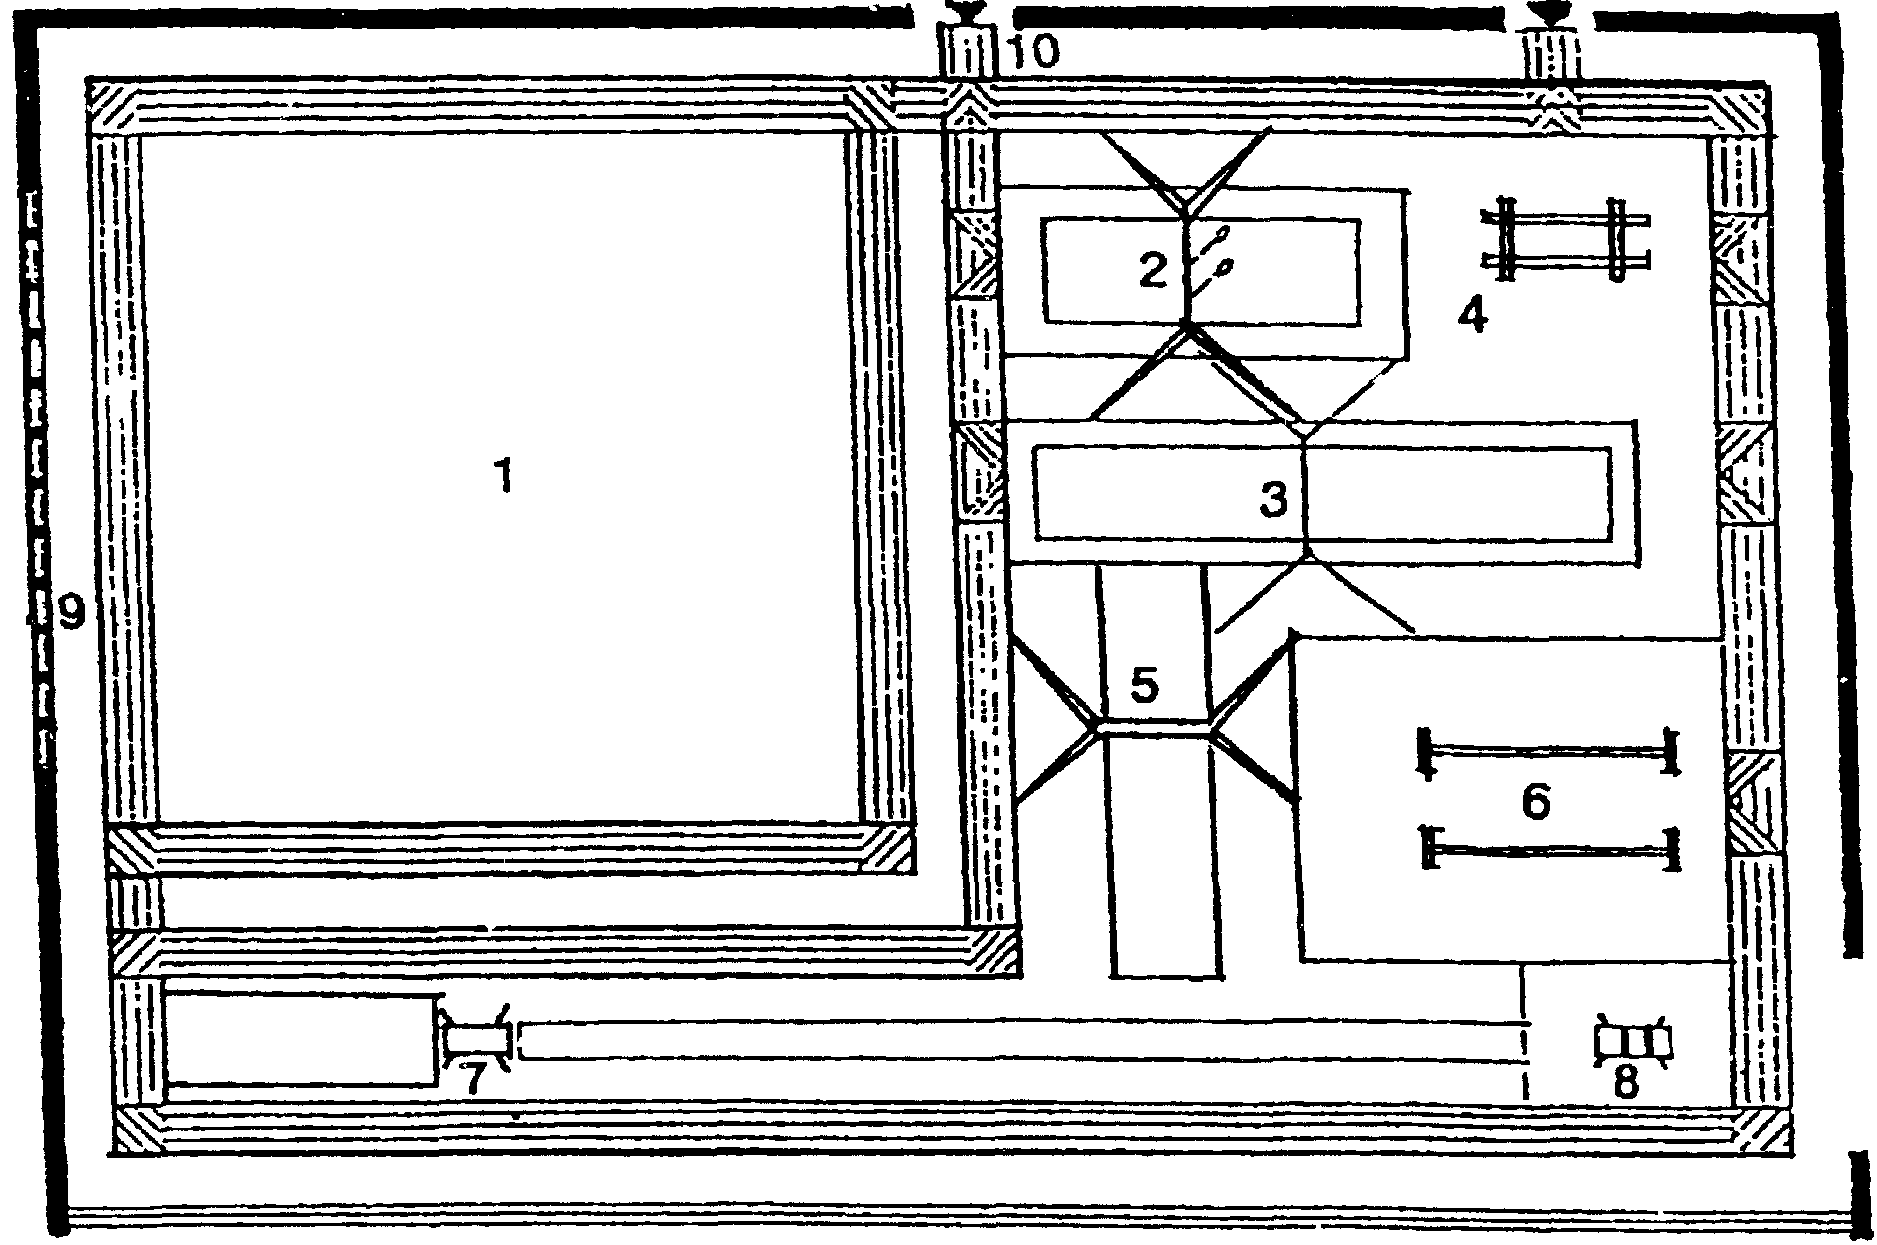 Схема гимнастического зала